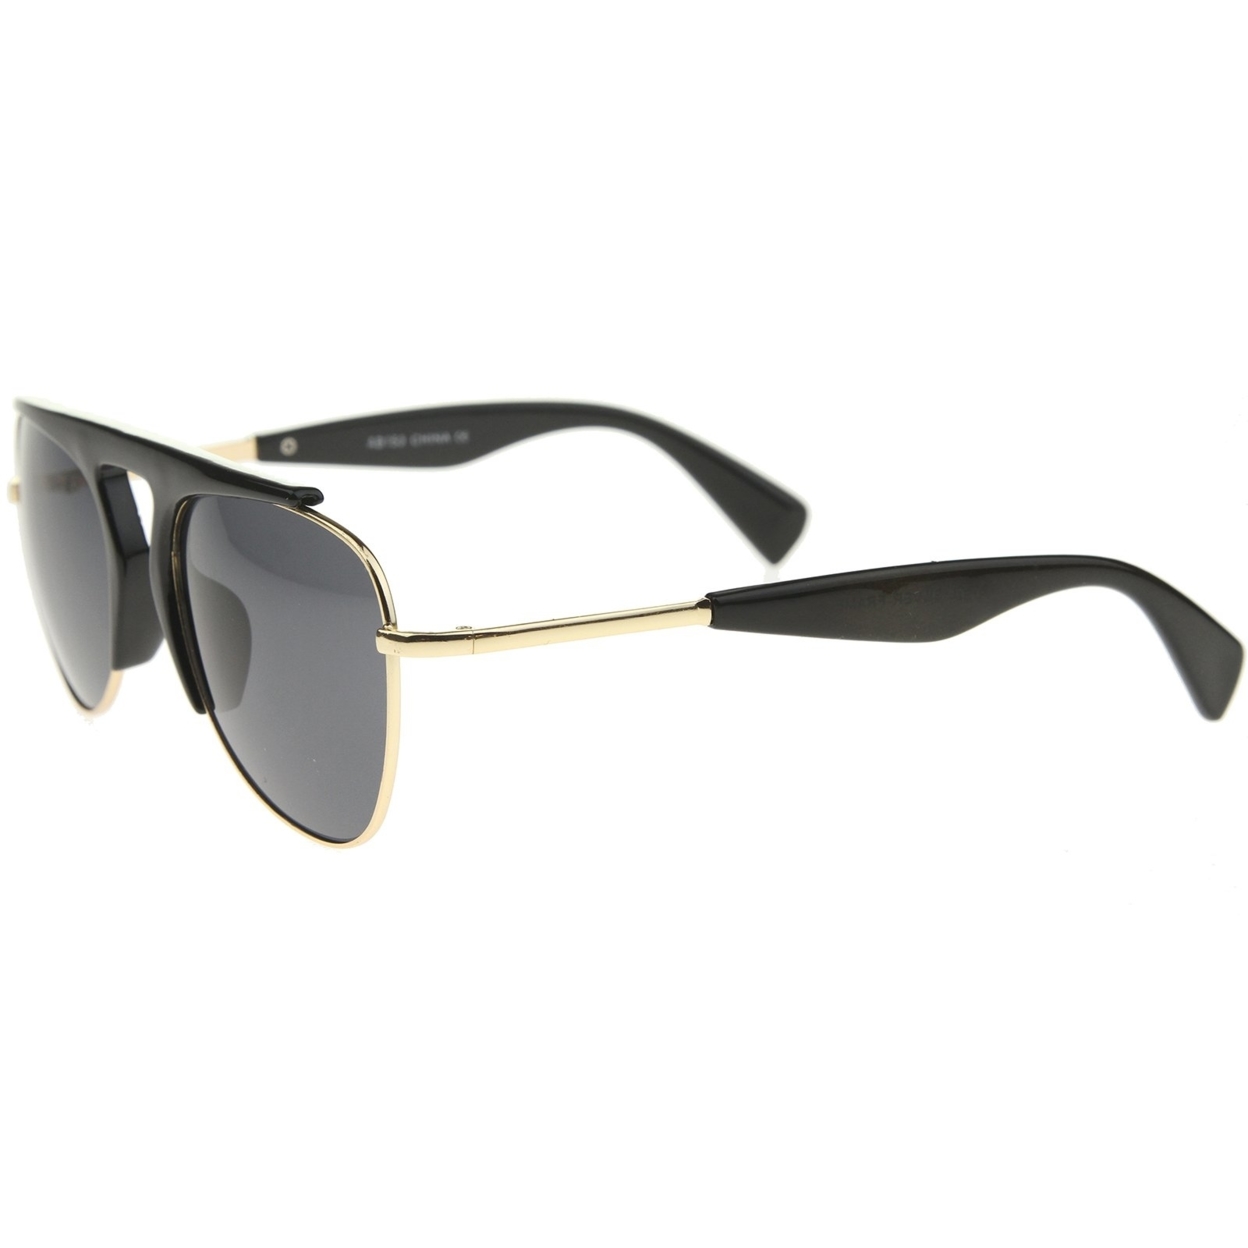 Modern Oversize Semi-Rimless Frame Teardrop Lens Aviator Sunglasses 57mm - Black-Gold / Smoke